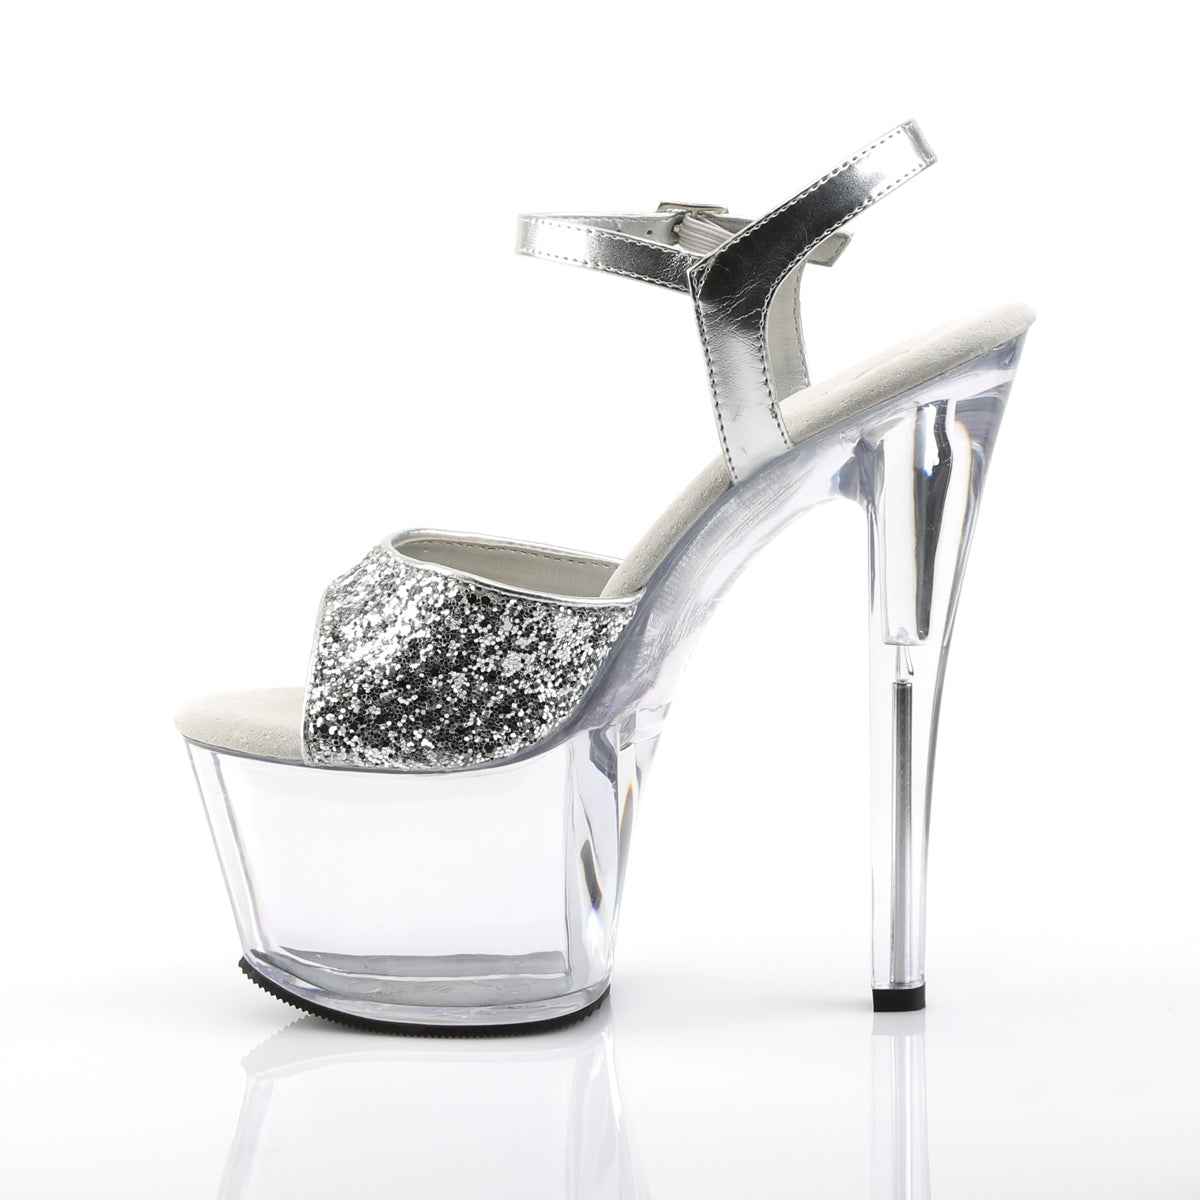 SKY-310 Pleaser 7" Heel Silver Glitter Pole Dancing Platform-Pleaser- Sexy Shoes Pole Dance Heels